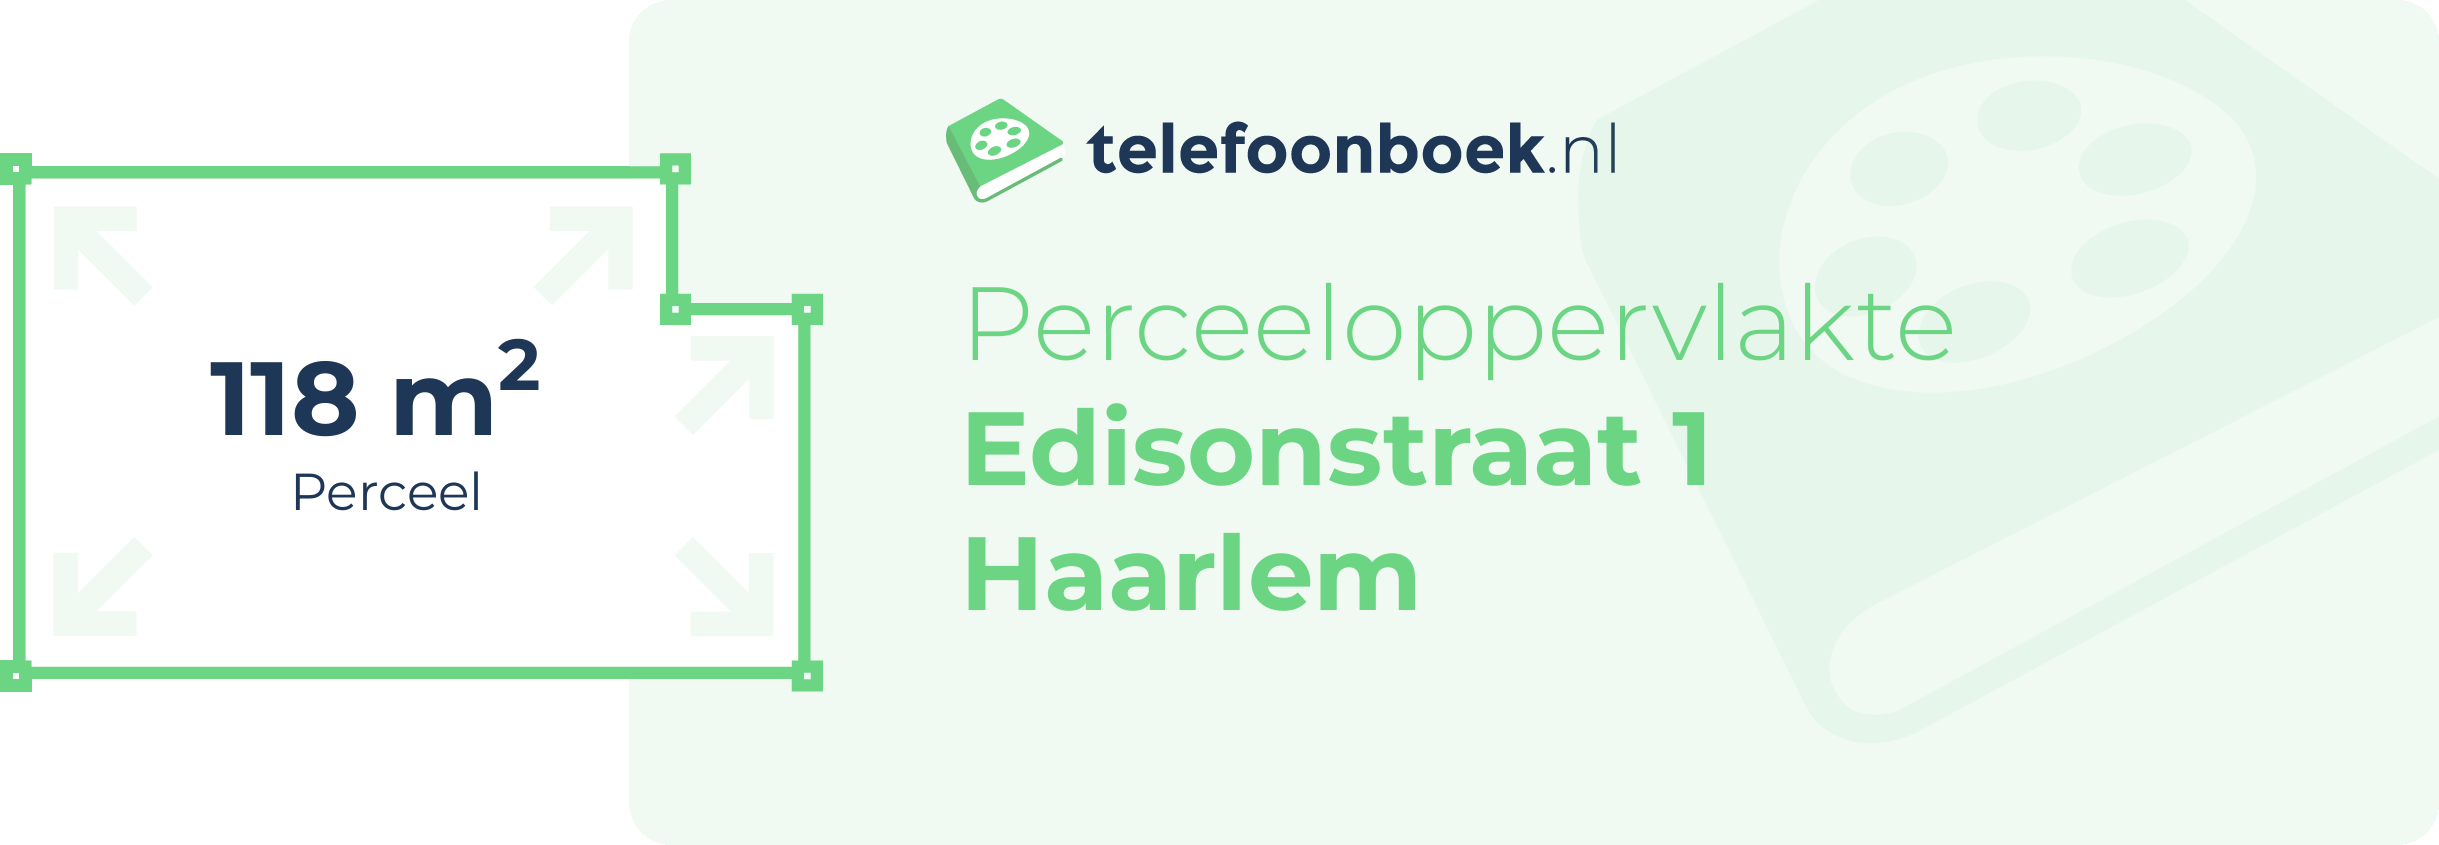 Perceeloppervlakte Edisonstraat 1 Haarlem